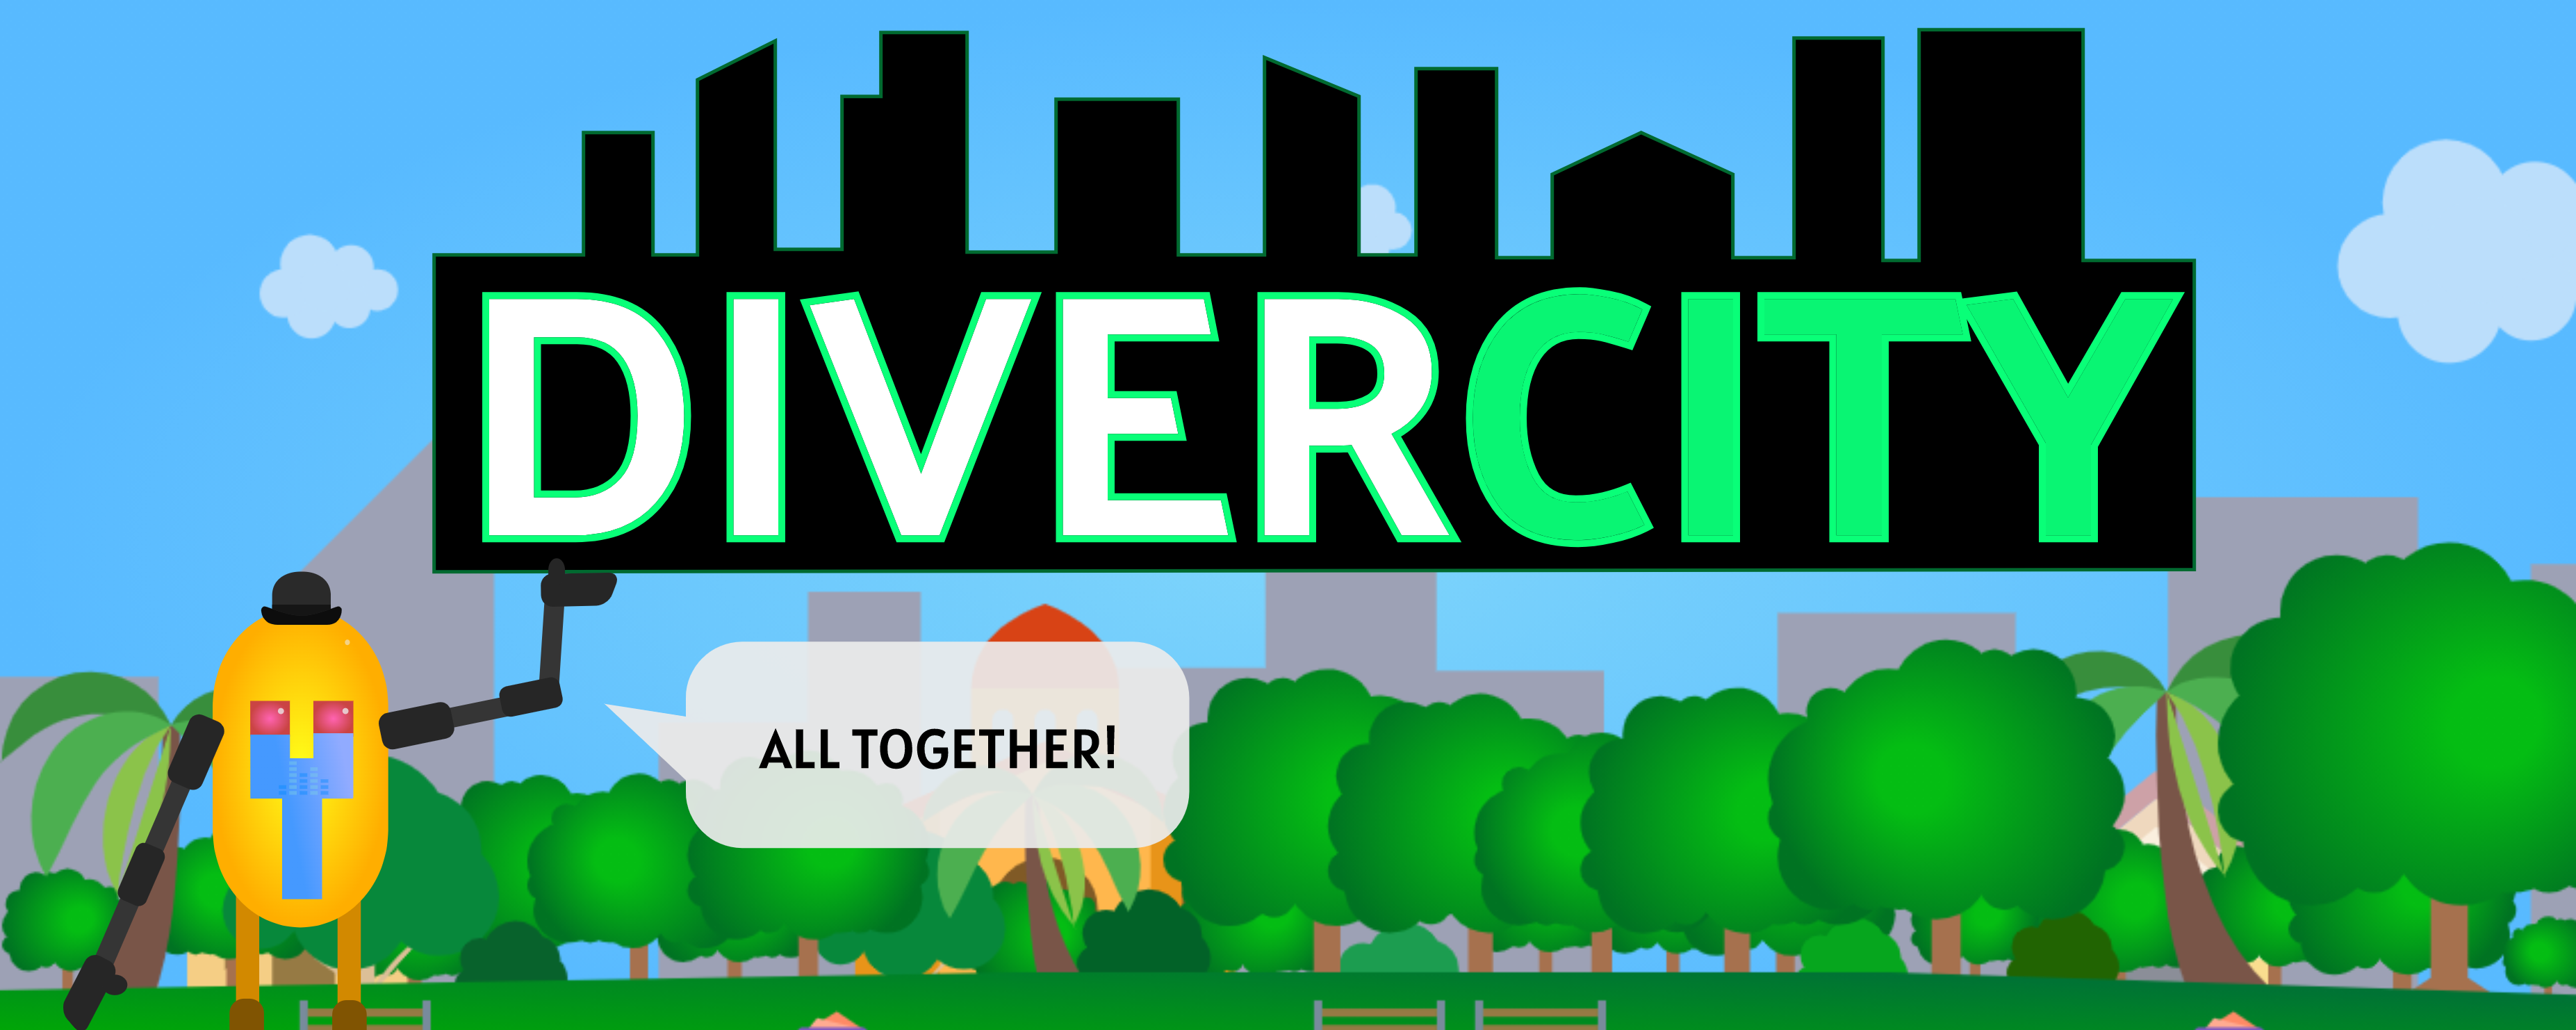 DiverCity - All Together!